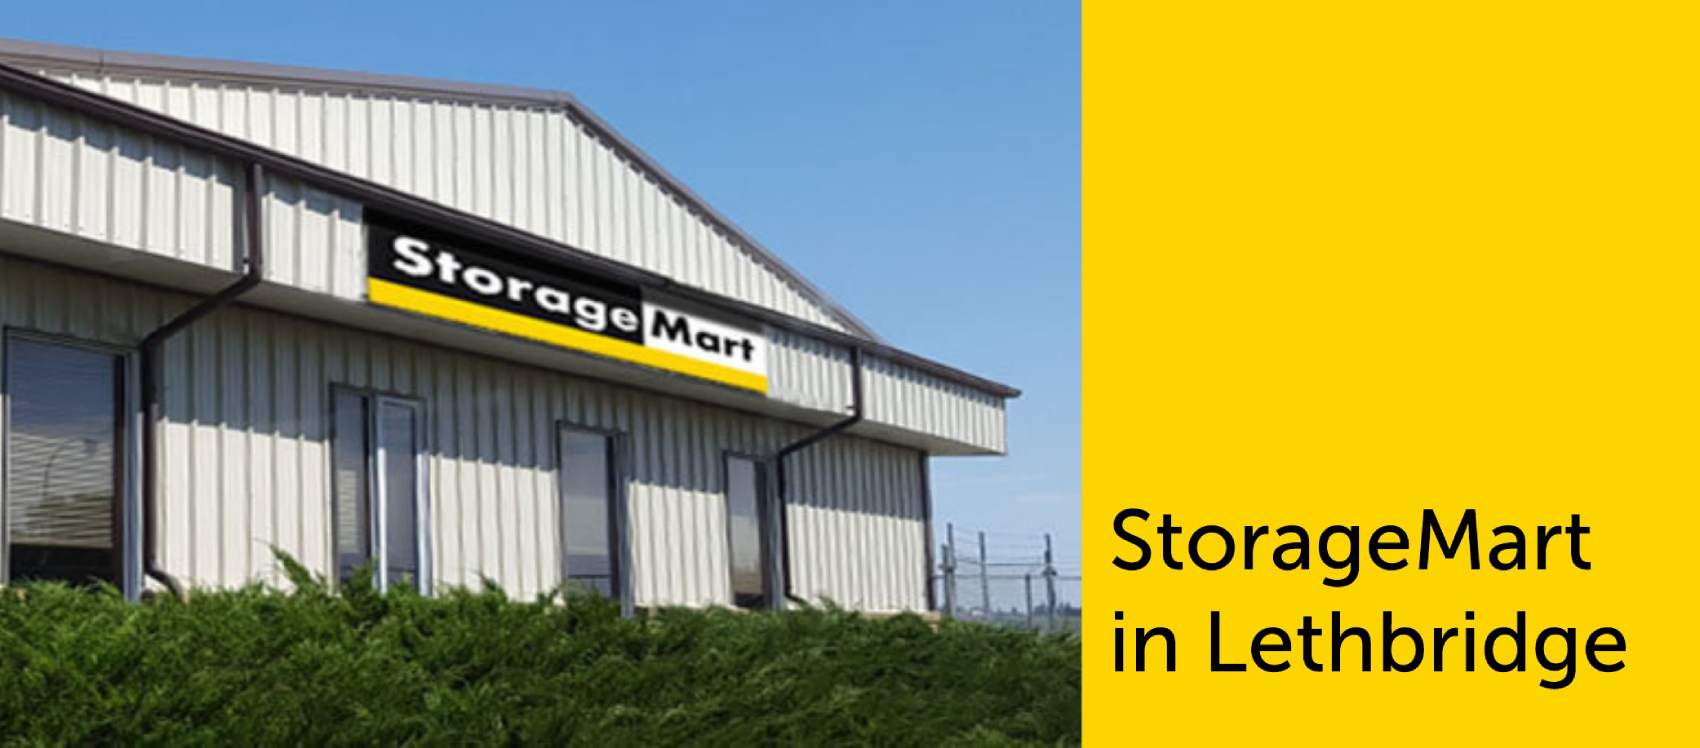 New StorageMart Lethbridge Storage Units Provide Storage Solutions